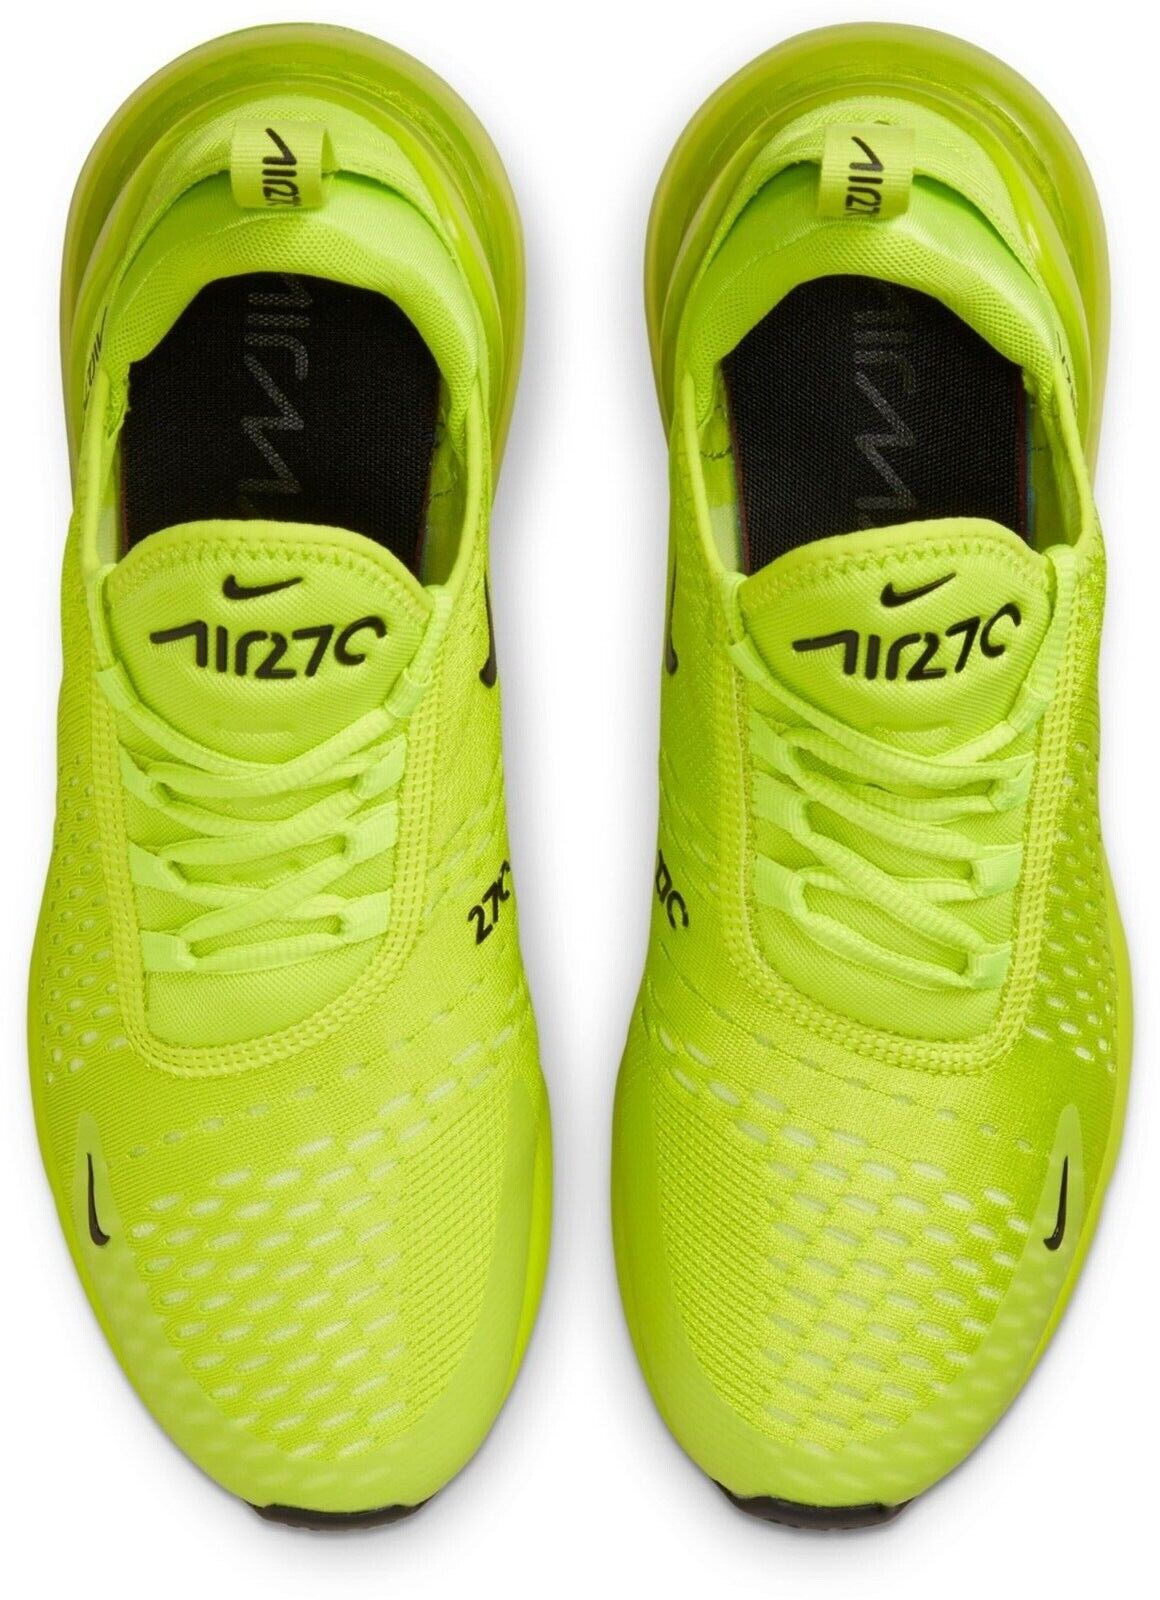 Nike Air Max 270 DV2226-300 Women's Atomic Green & Black Tennis Ball Shoes DDJJ9 (6) - image 3 of 5